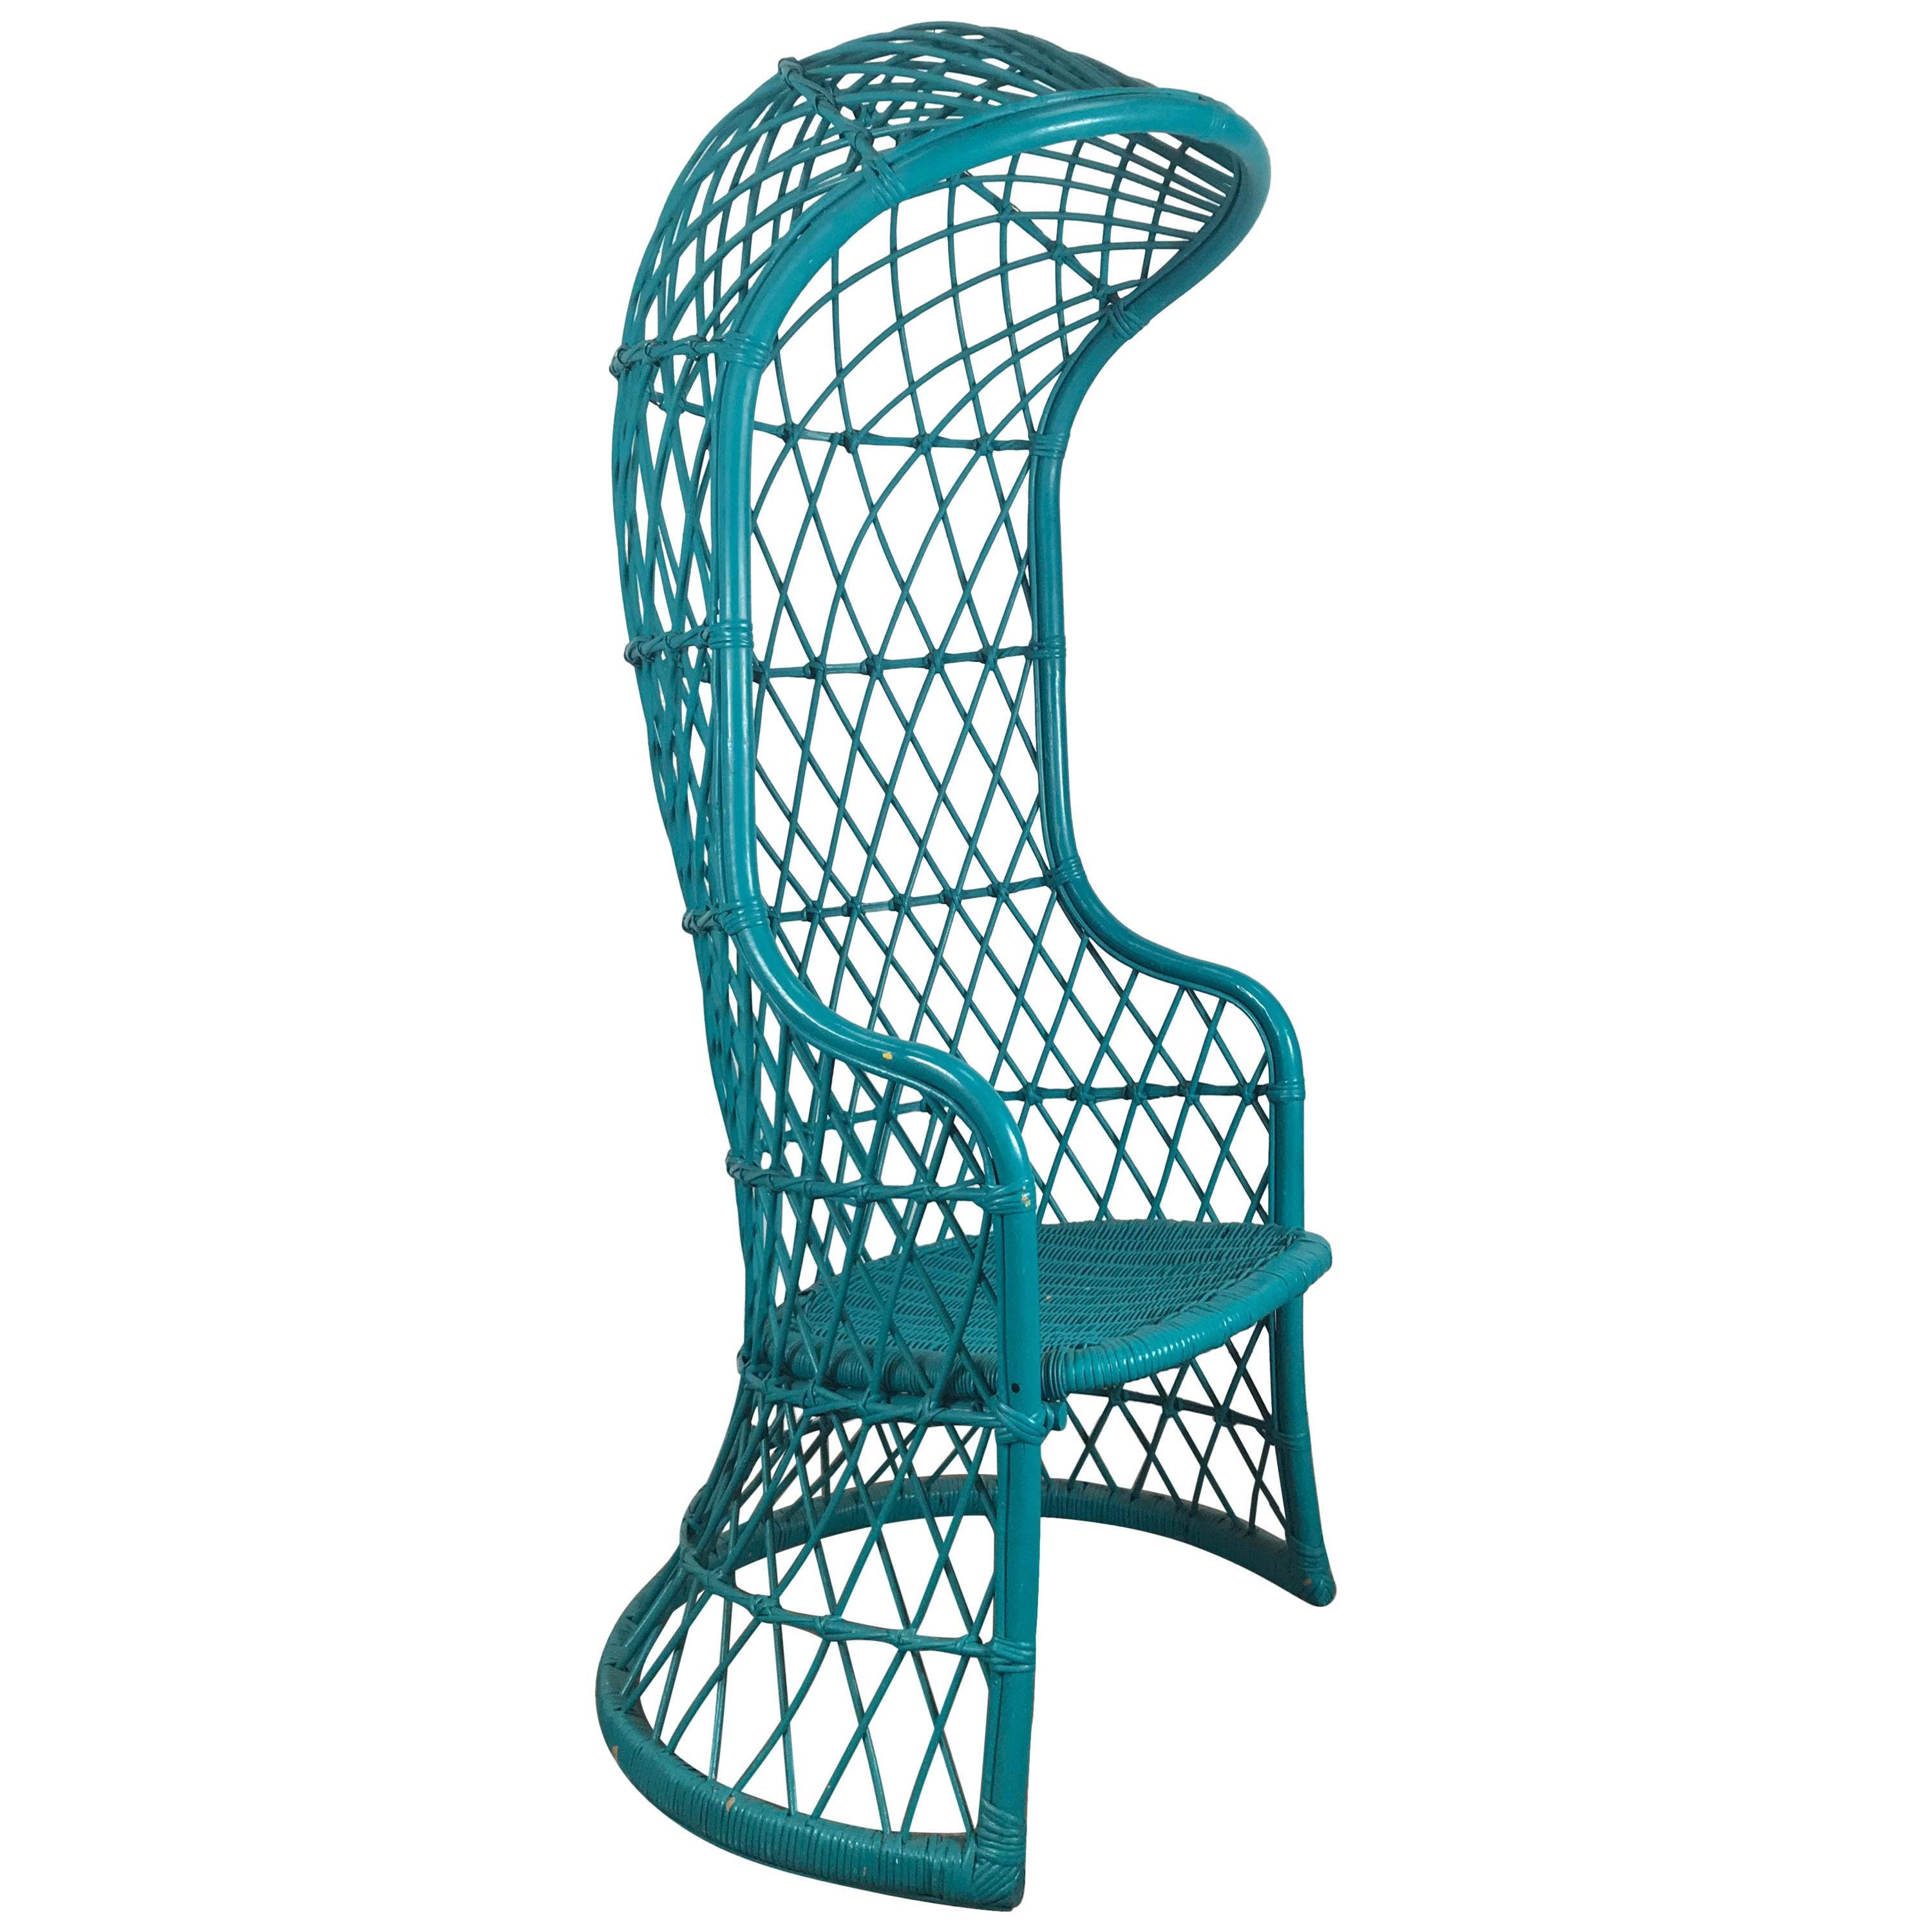 Unusual Modernist Hooded Canopy Wicker Chair